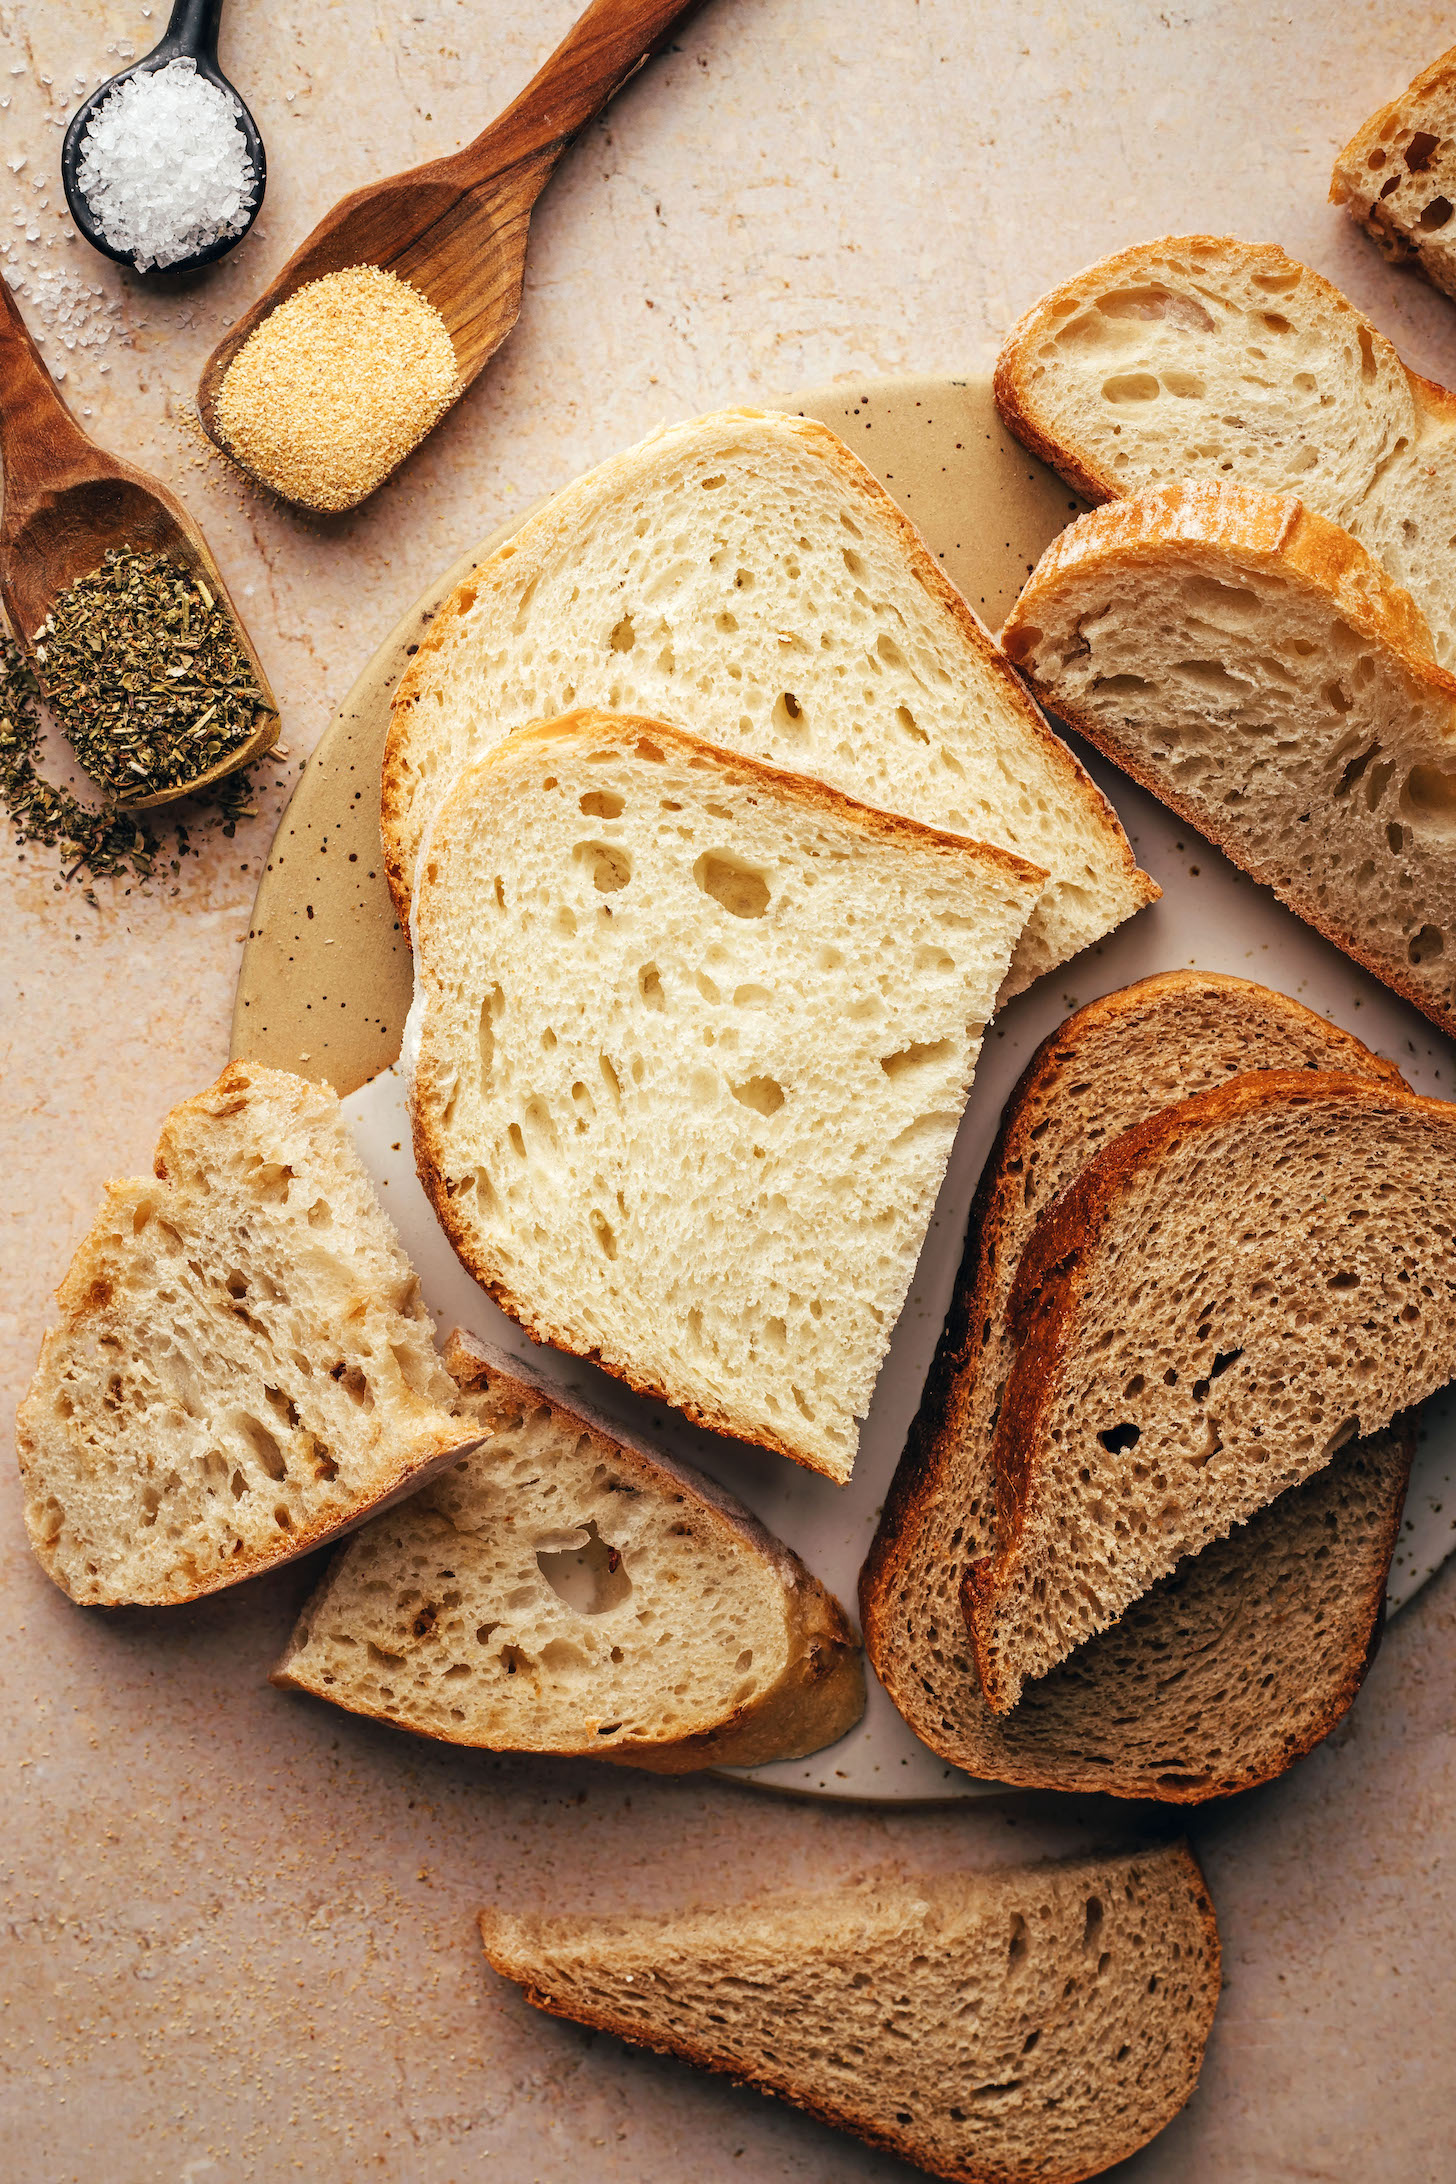 Salt, dried Italian herbs, garlic powder, and different types of bread